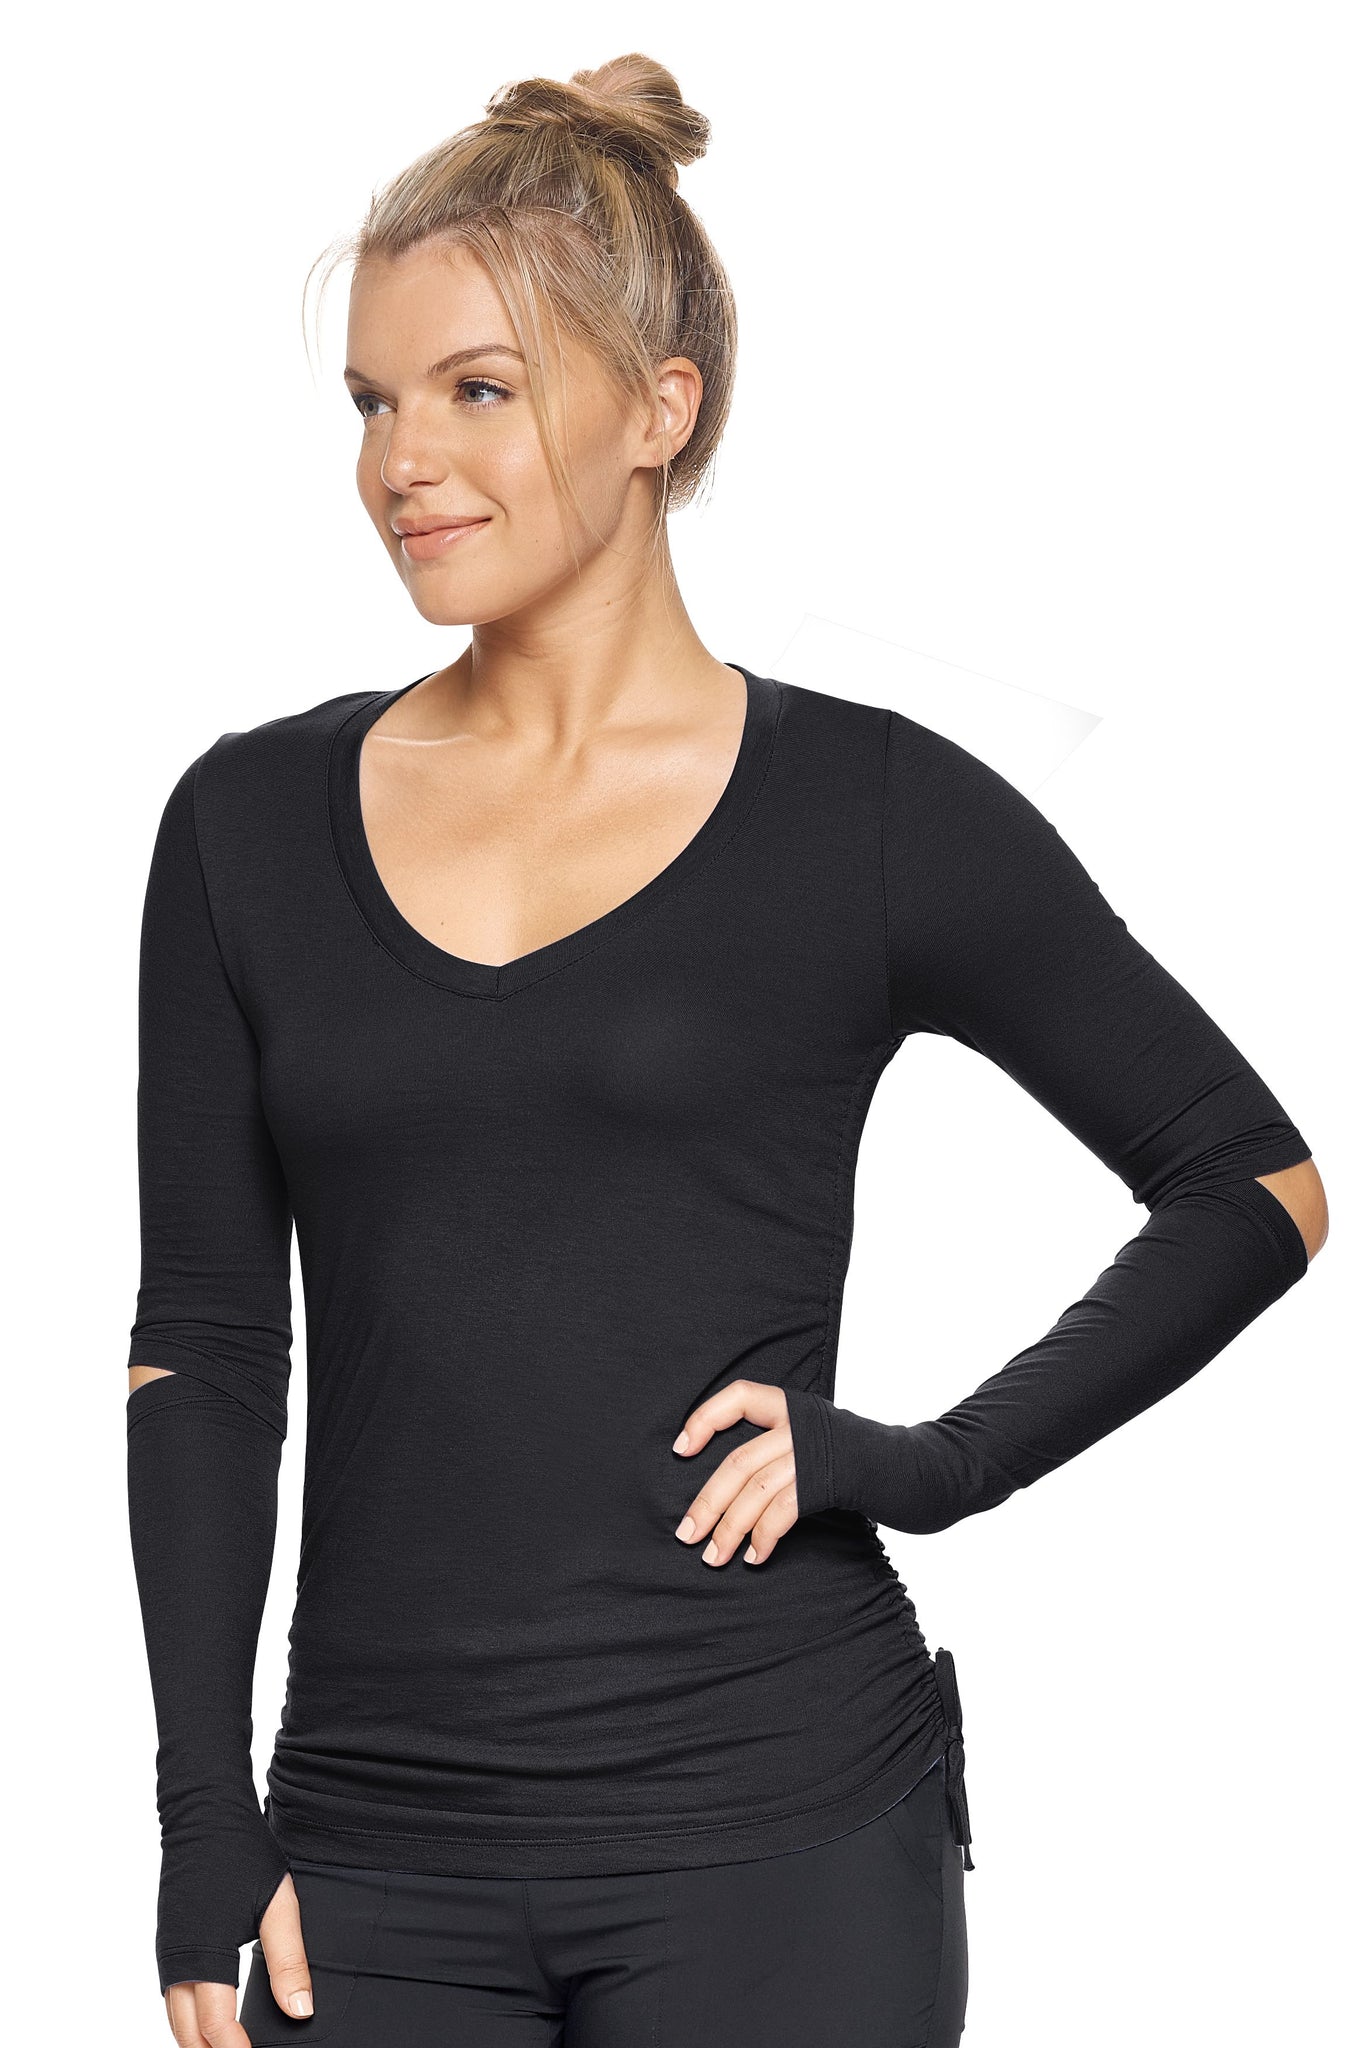 Expert Brand Wholesale Women's MoCA™ Laurel Long Sleeve V-Neck in Black#black